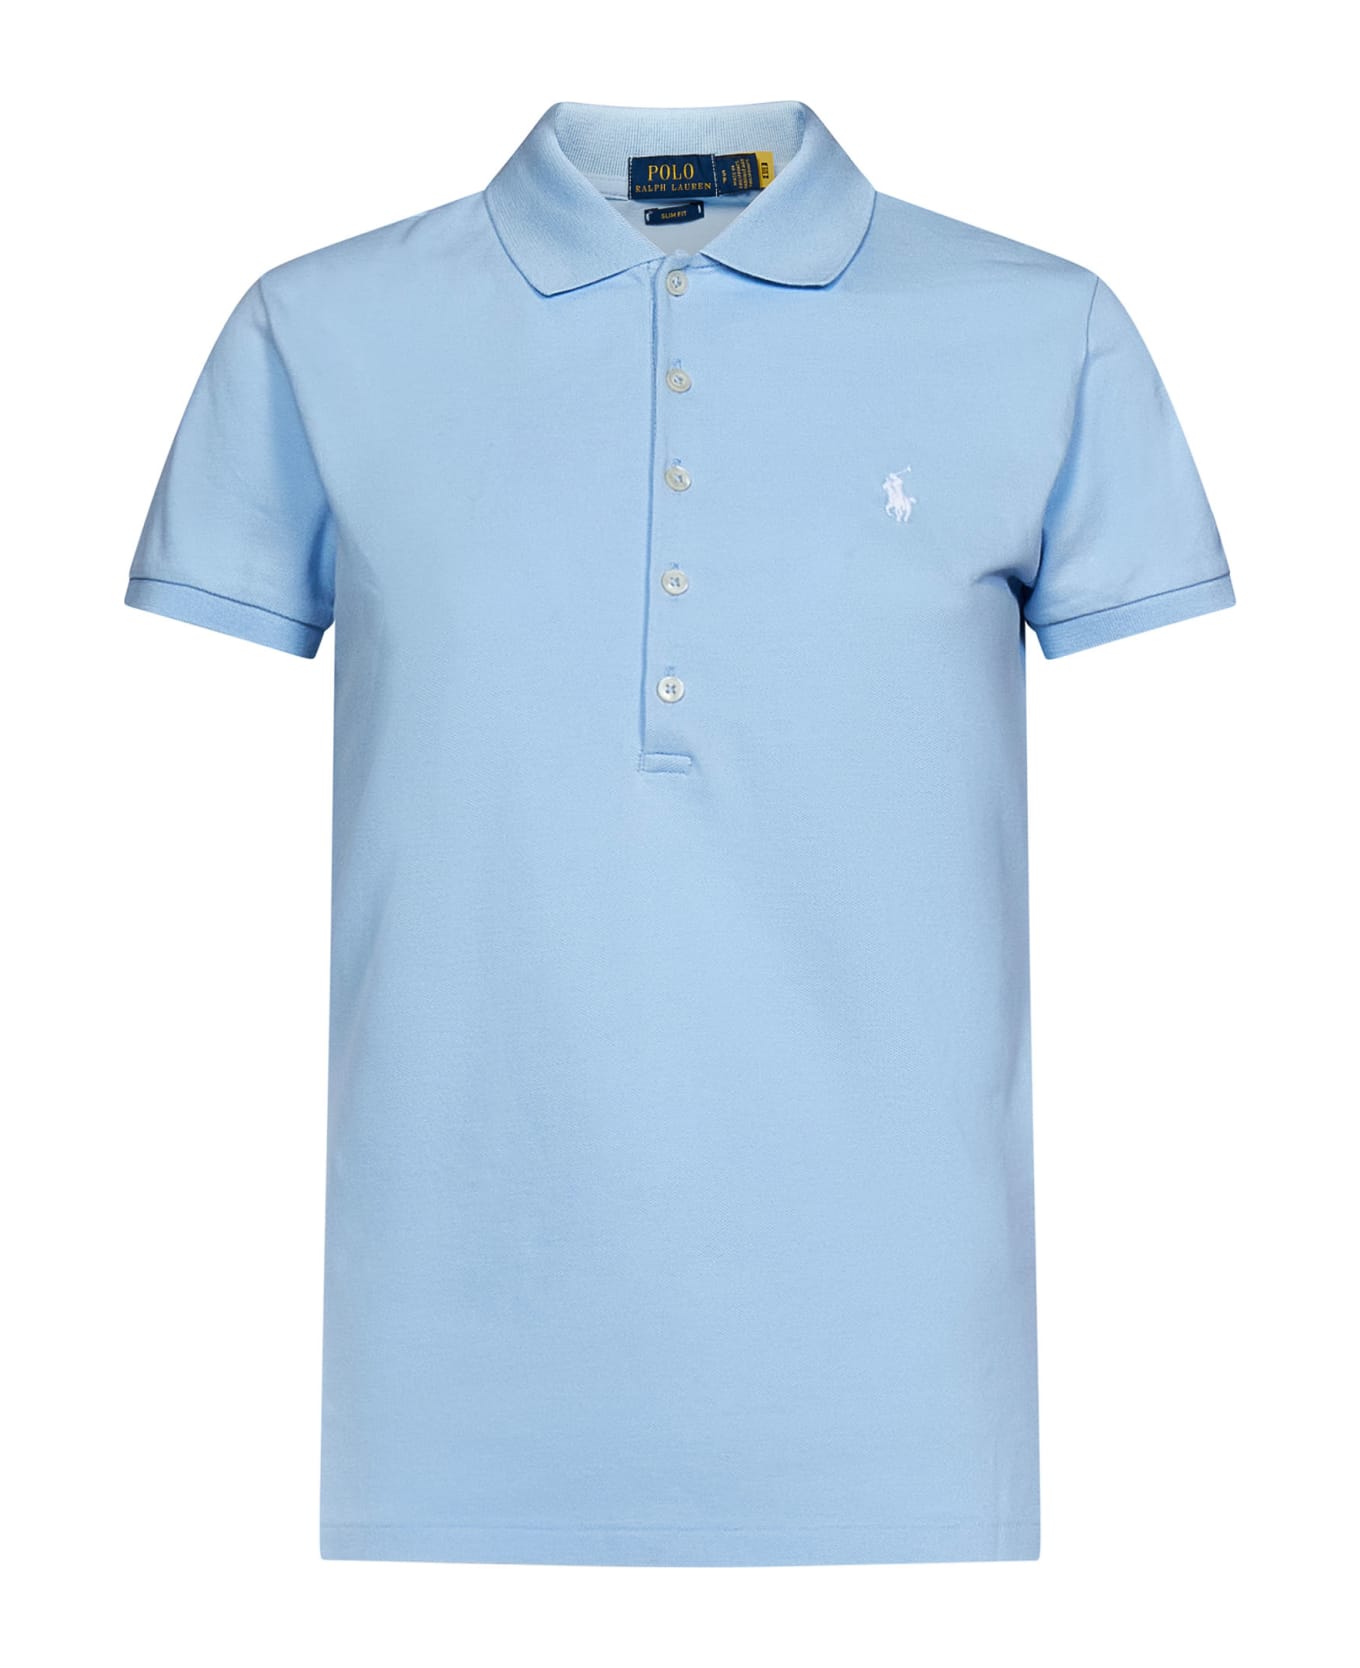 Polo Ralph Lauren Polo Shirt - Office Blue